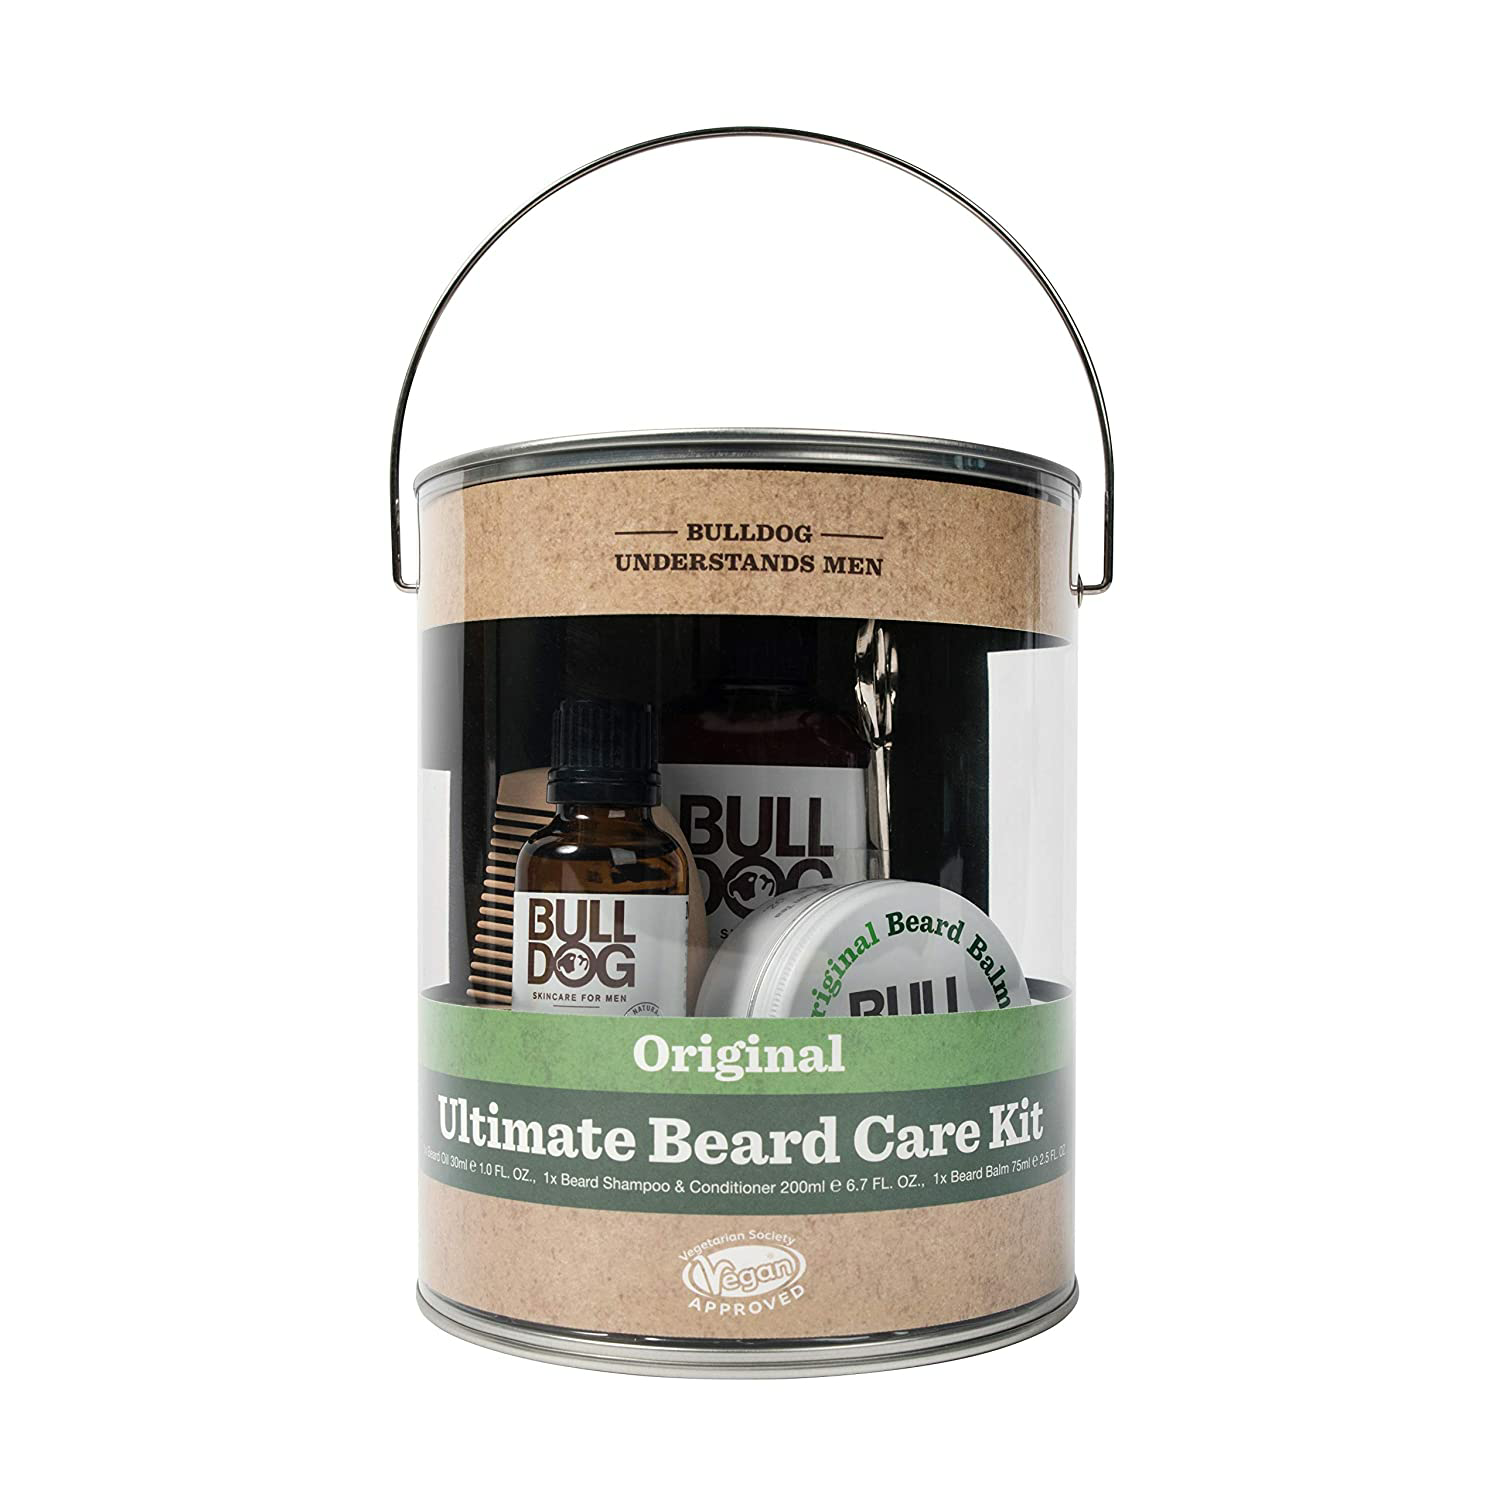 Amazon.com :$13.19 Bulldog Mens Skincare & Grooming Original Ultimate Beard Care Kit Including: Beard Shampoo & Conditioner, Beard Oil, Balm, Beard Comb/ Beard Scissors $13.19